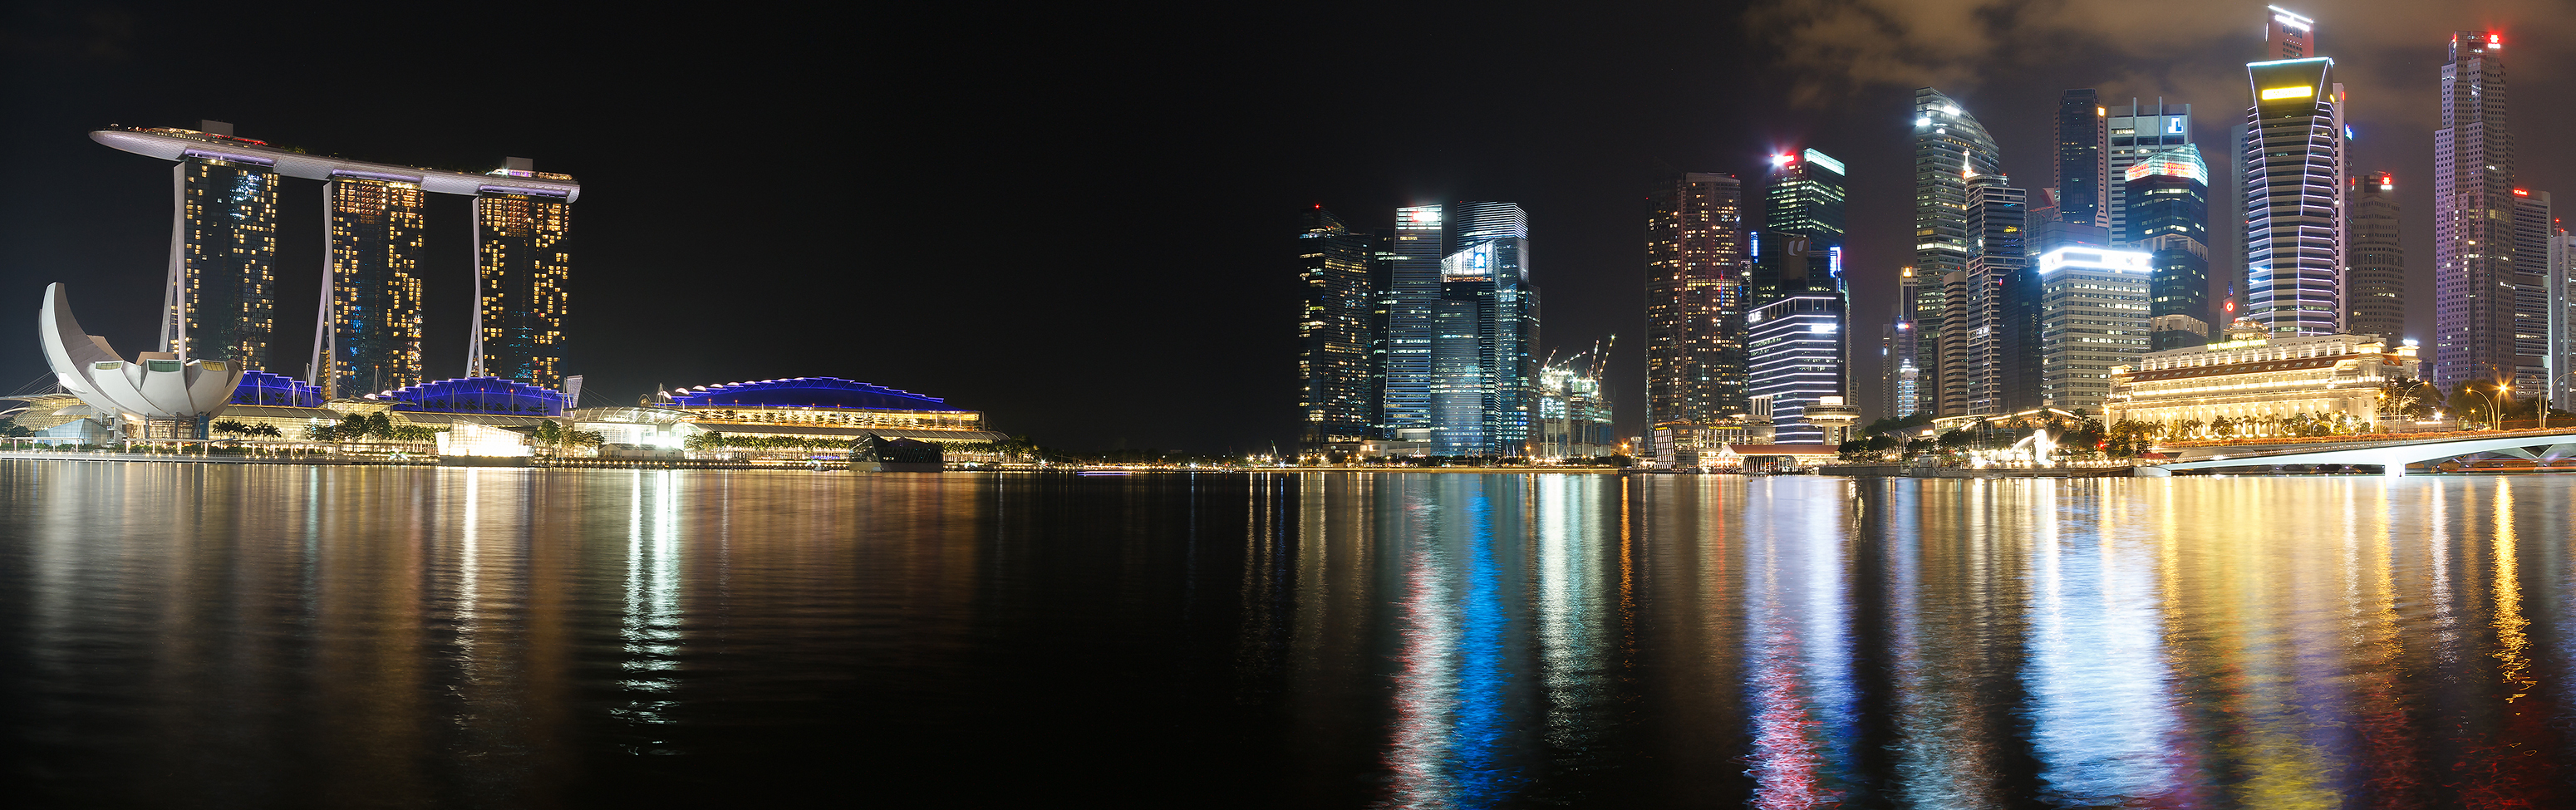 philip-howold-Singapur-Nacht-Panorama-001